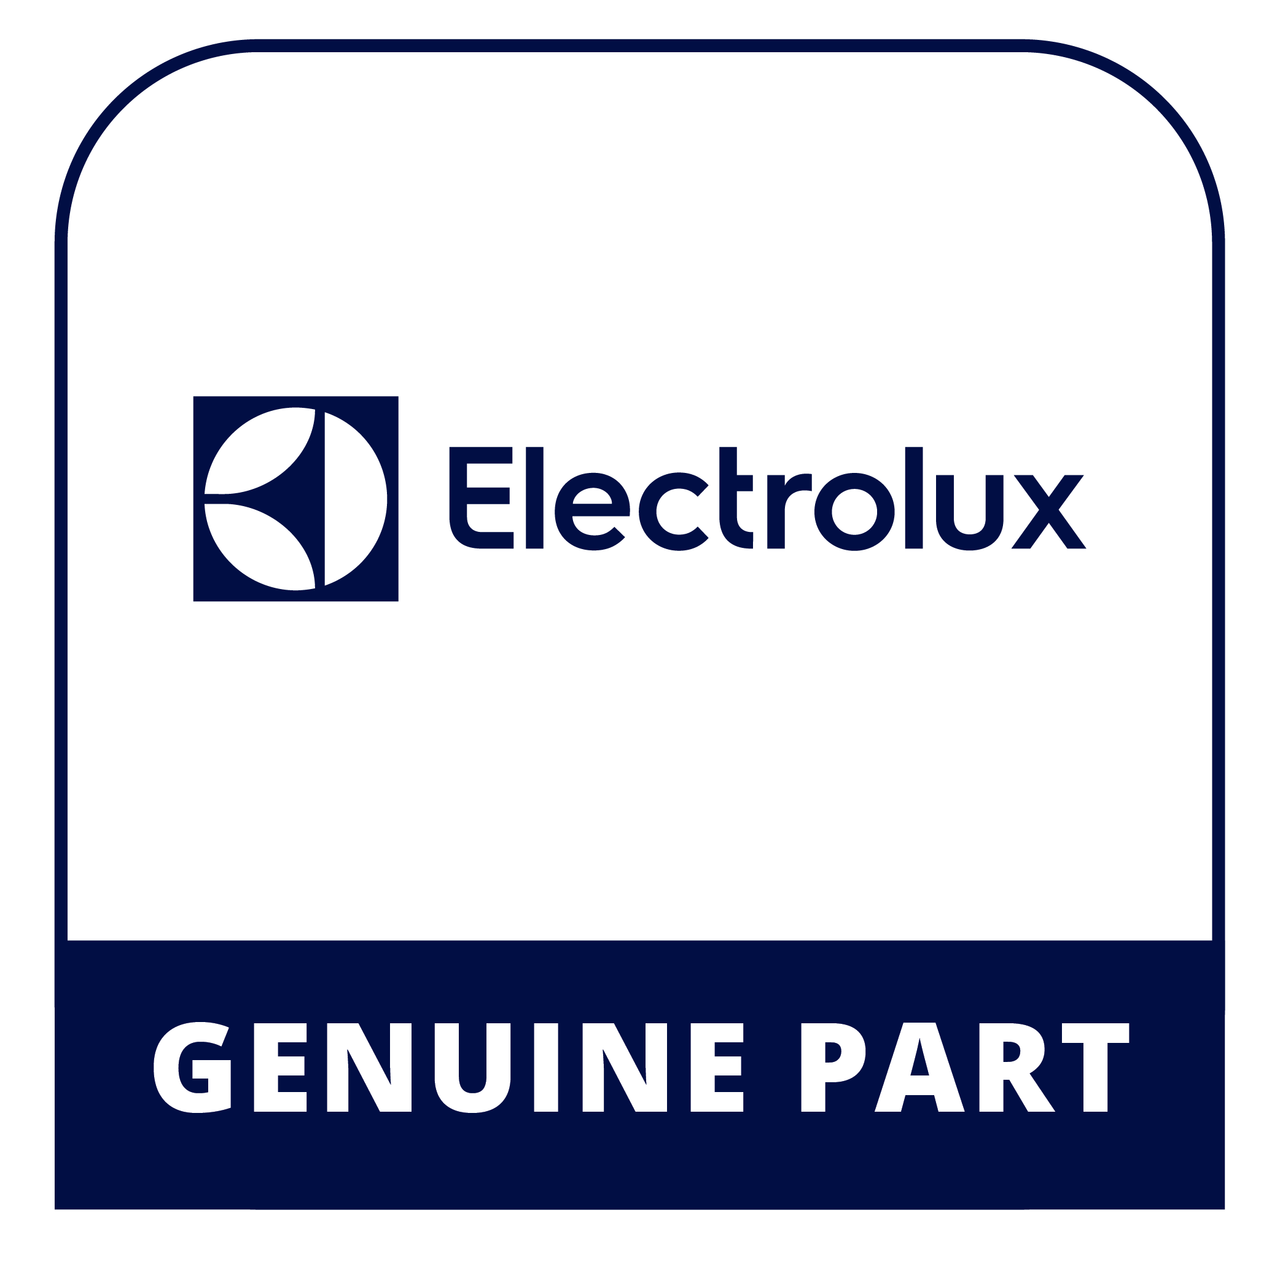 Frigidaire - Electrolux 5304533749 Air Filter - Genuine Electrolux Part